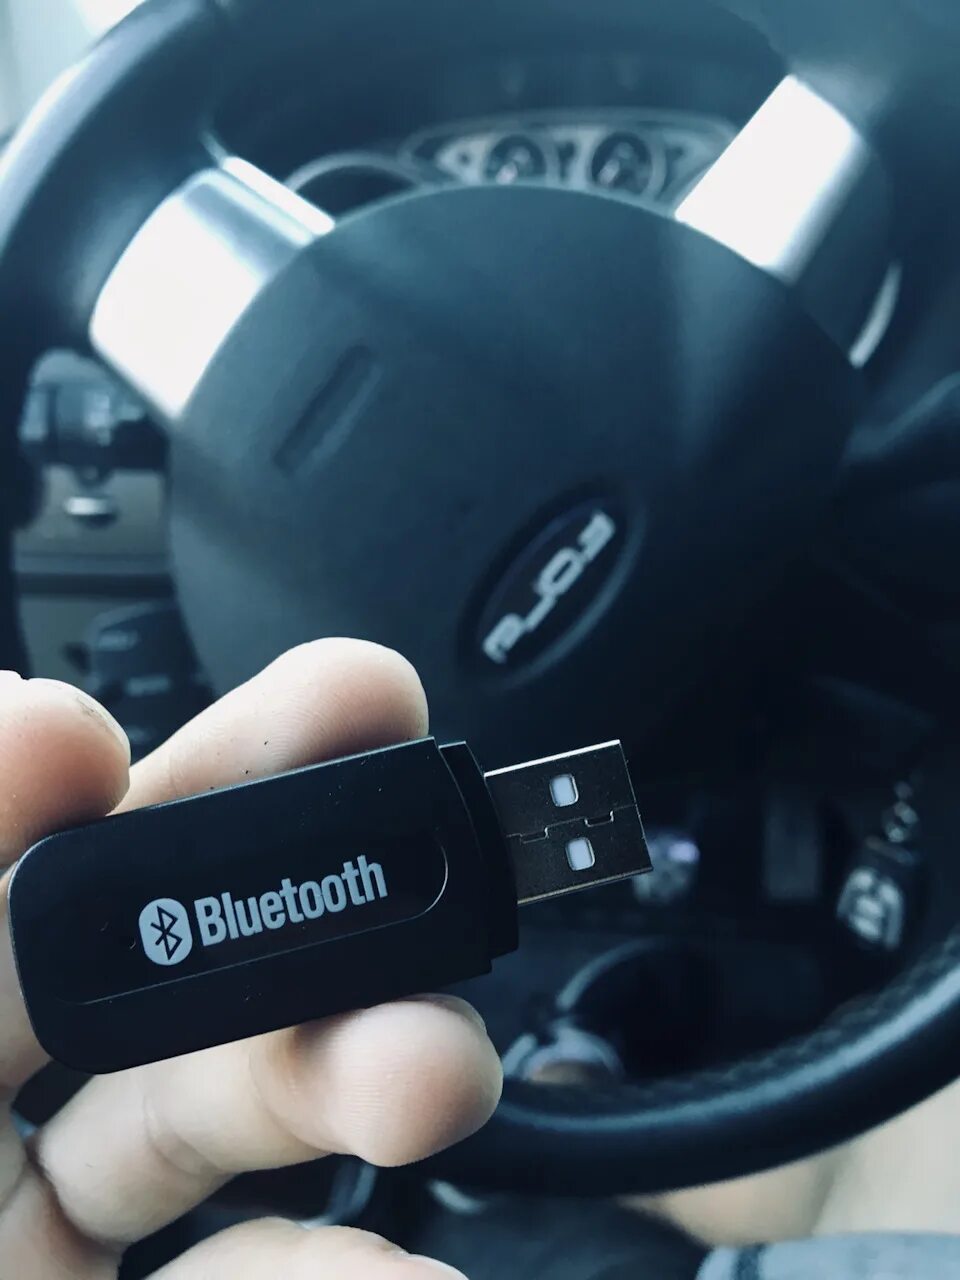 Aux Bluetooth адаптер для Ford Focus 2. Ford Focus 3 Bluetooth адаптер. Блютуз aux Форд фокус 2. USB Bluetooth адаптер Ford Focus 3.